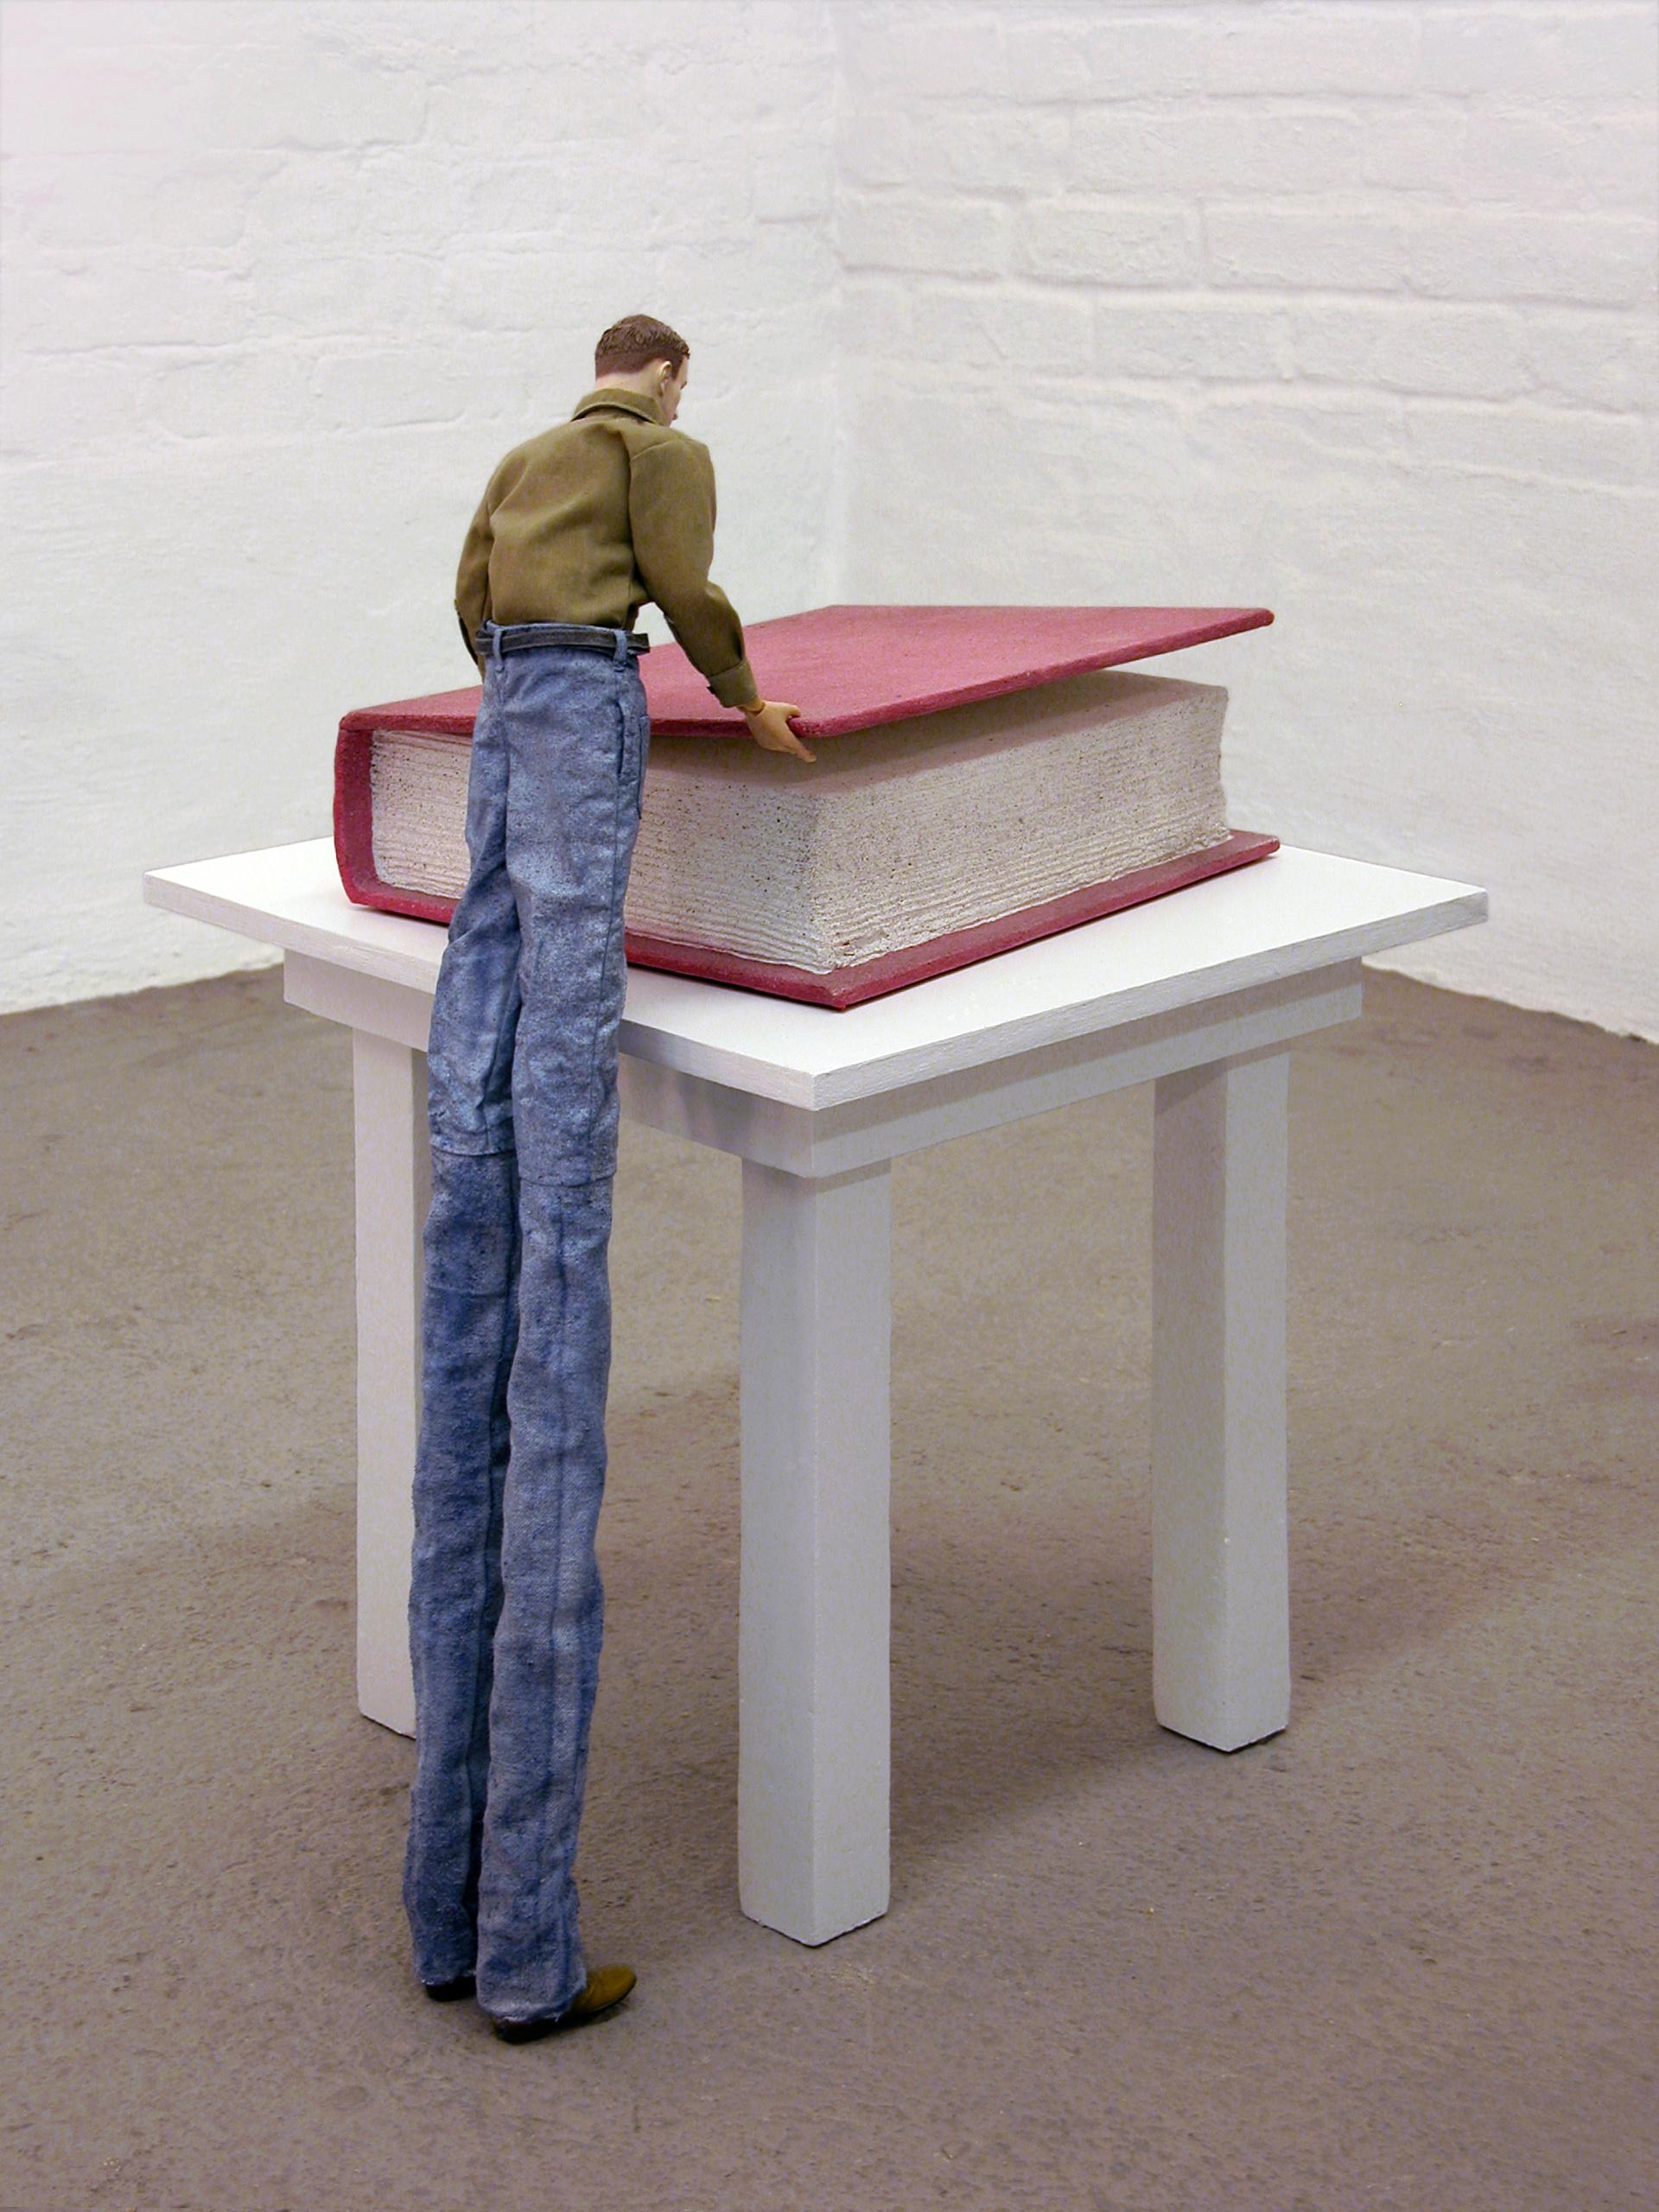 Hans Van Meeuwen Abstract Sculpture - Serge Bernier Reading, mixed media sculpture